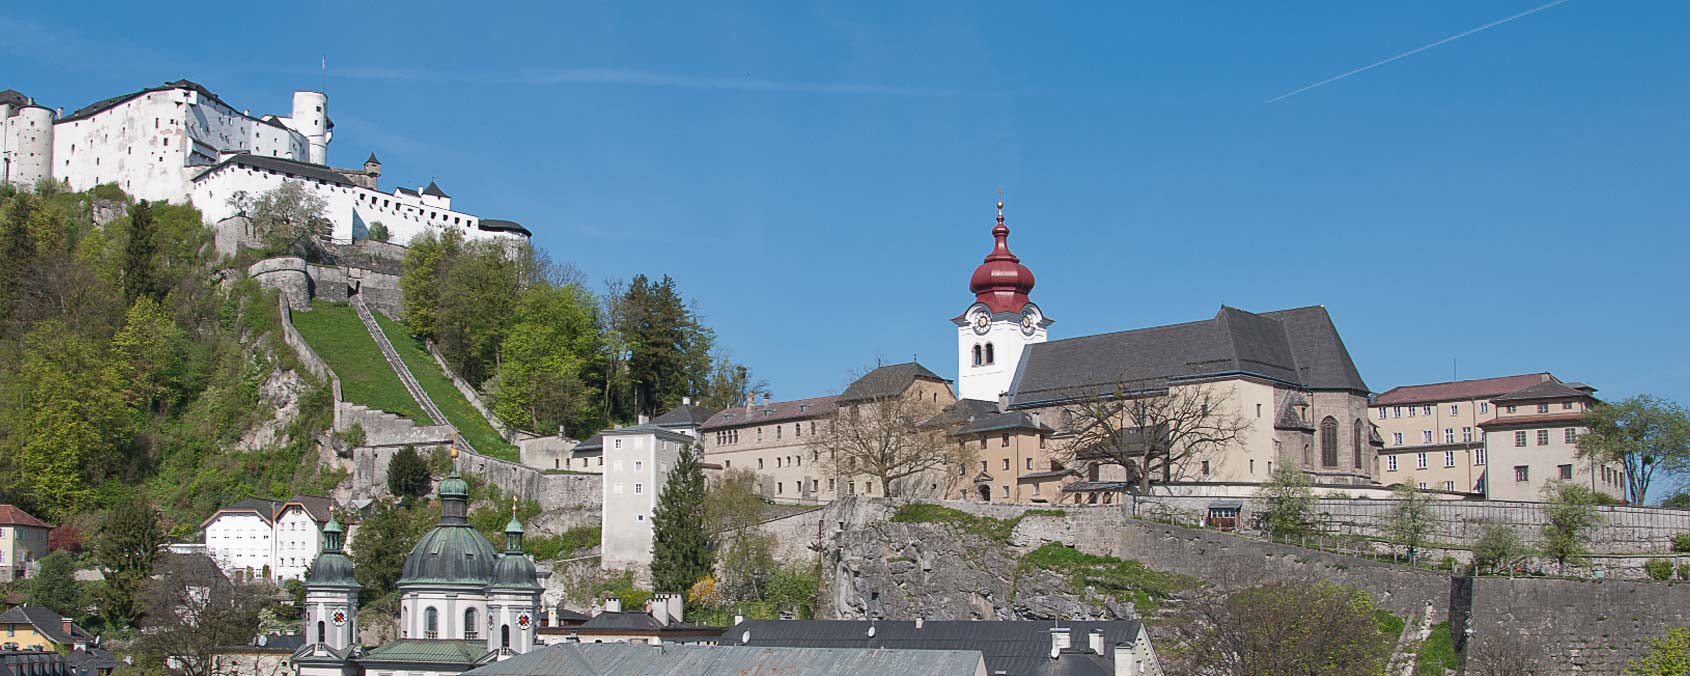 Stift Nonnberg Salzburg